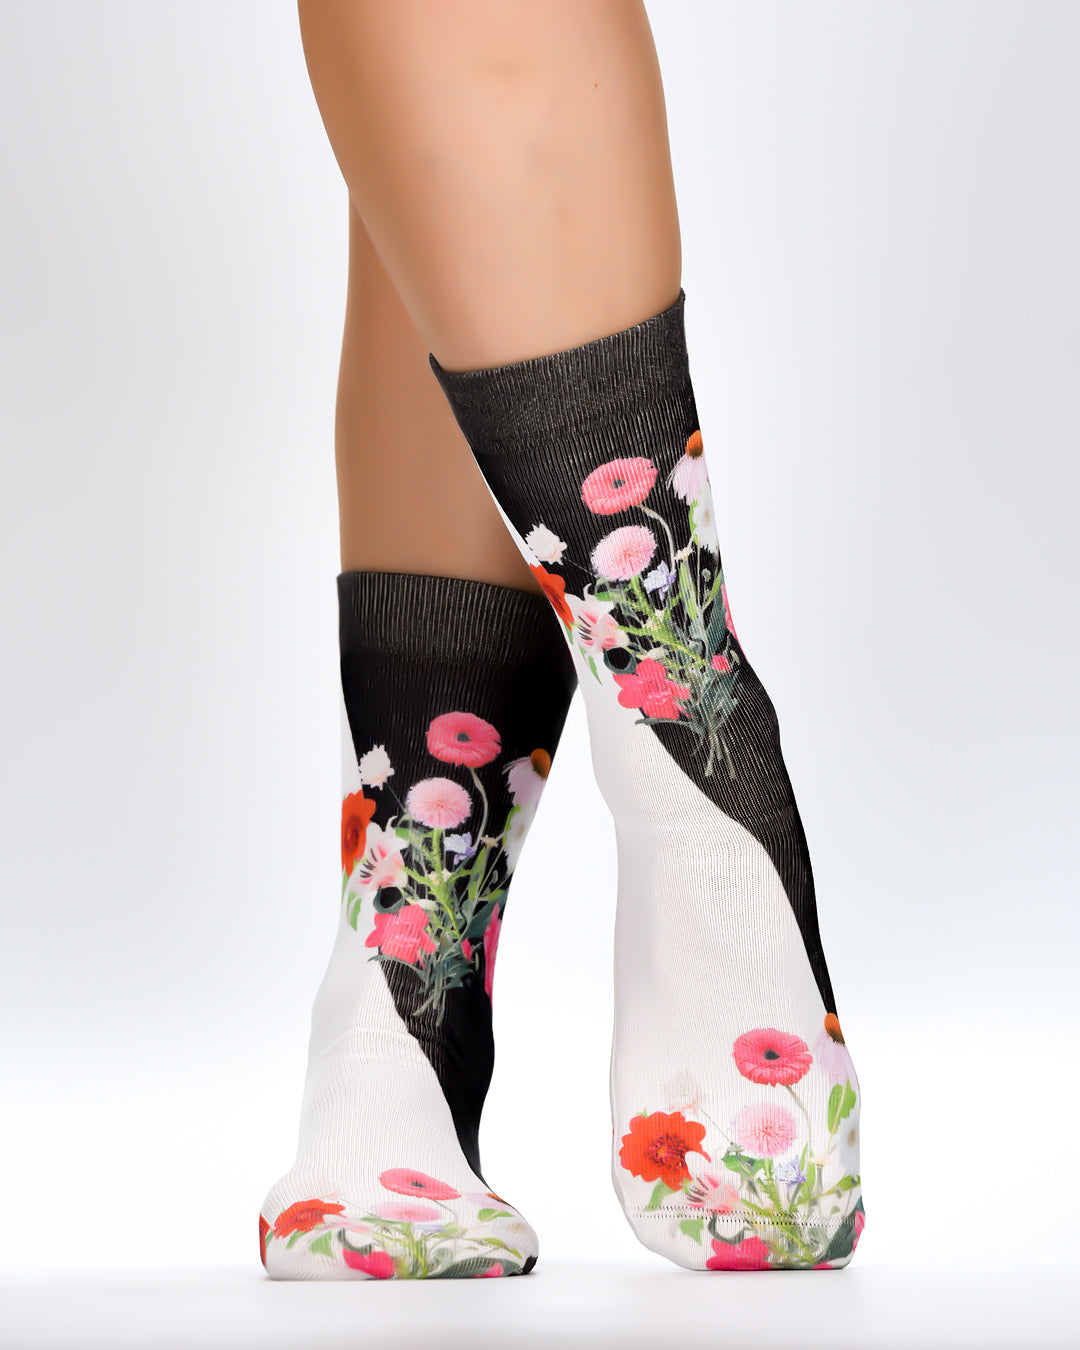 Yinyang Flowers I Lady Socks